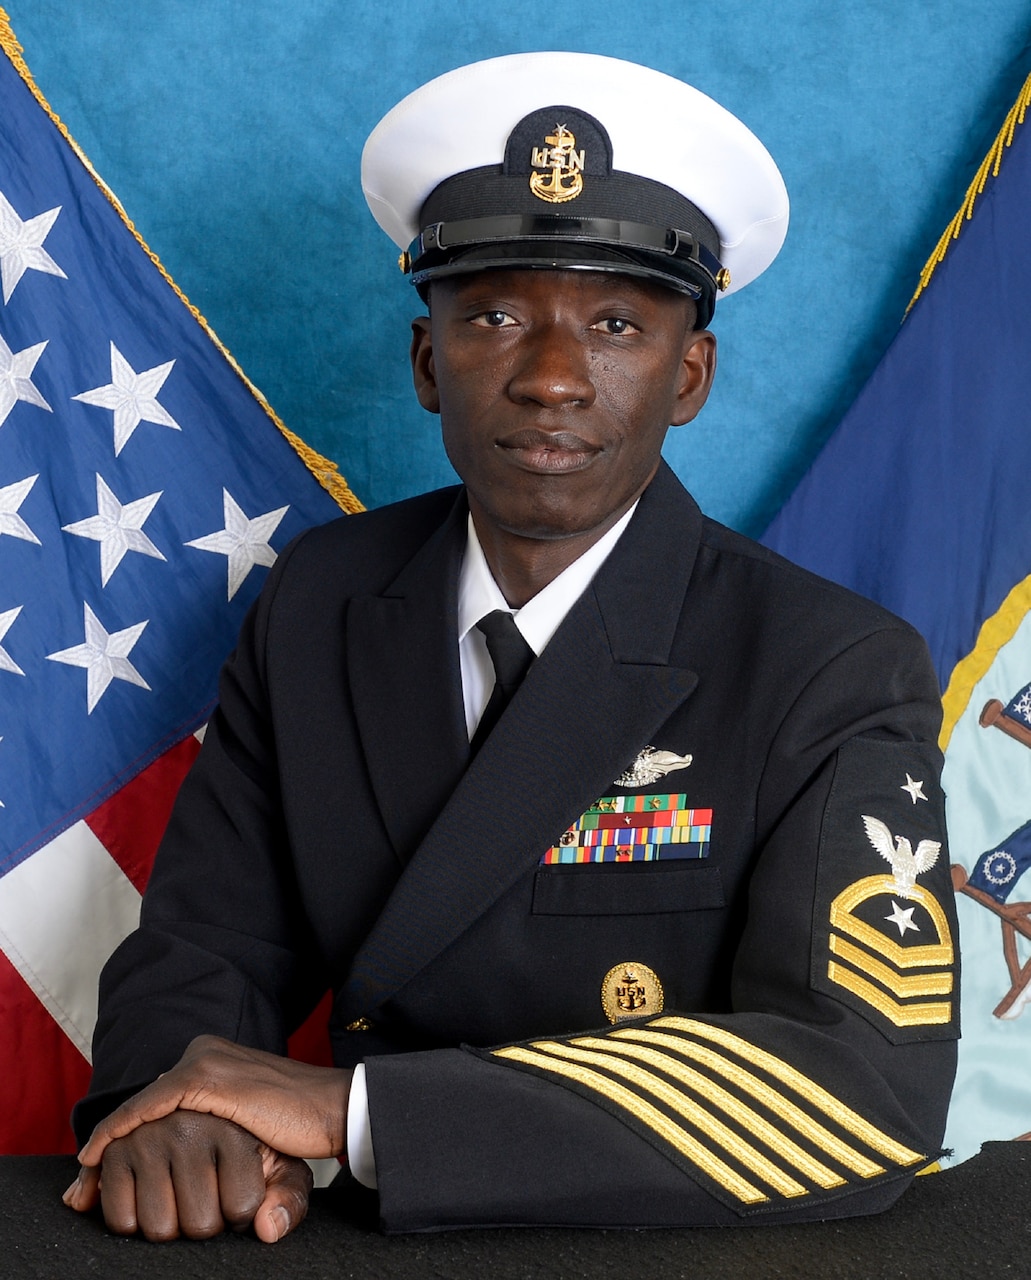 Command Senior Chief (FMF) Mamadou “MO” Sambe